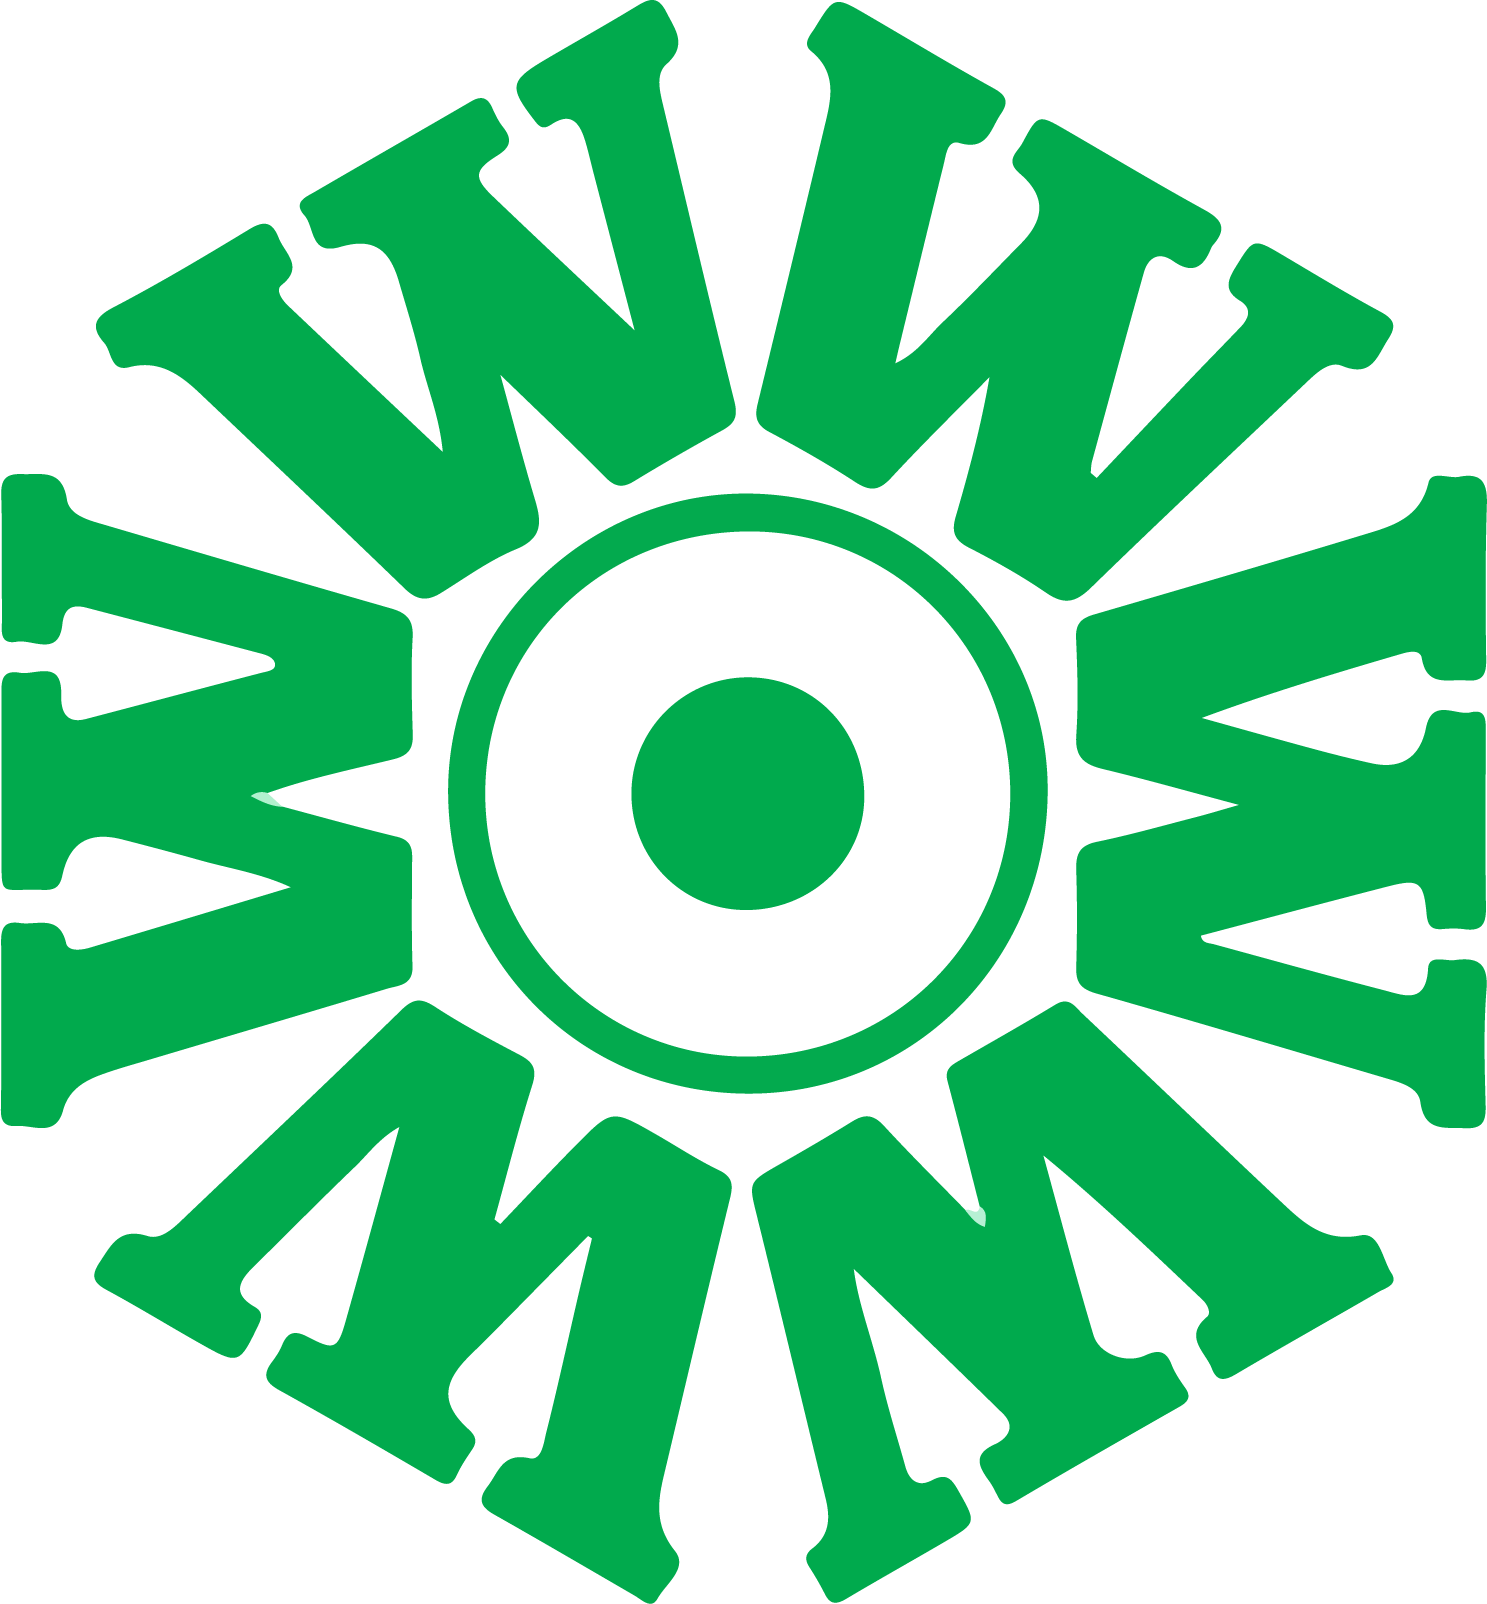 West Coast Paper Mills logo (transparent PNG)